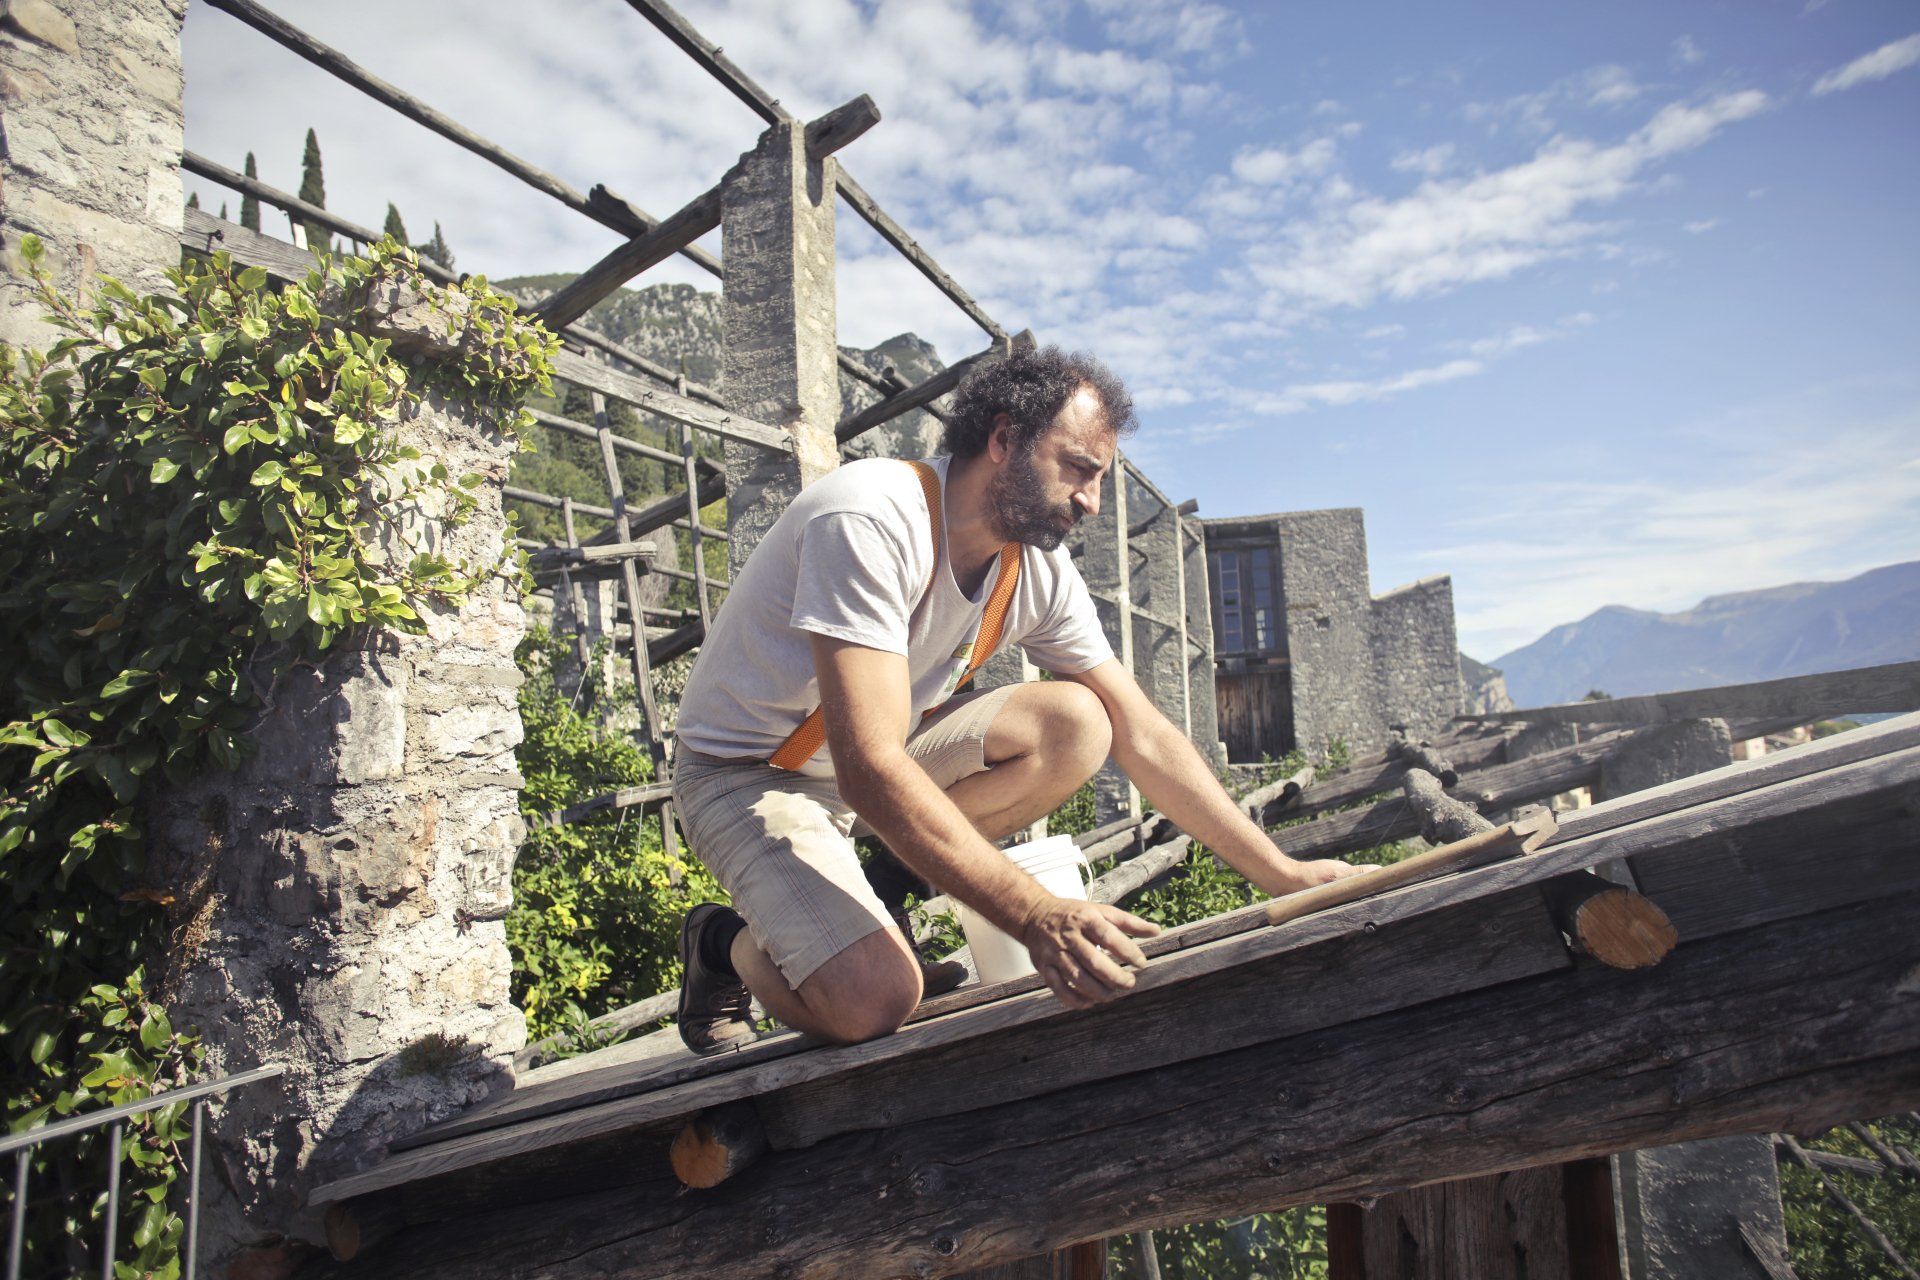 a man repairing a roof